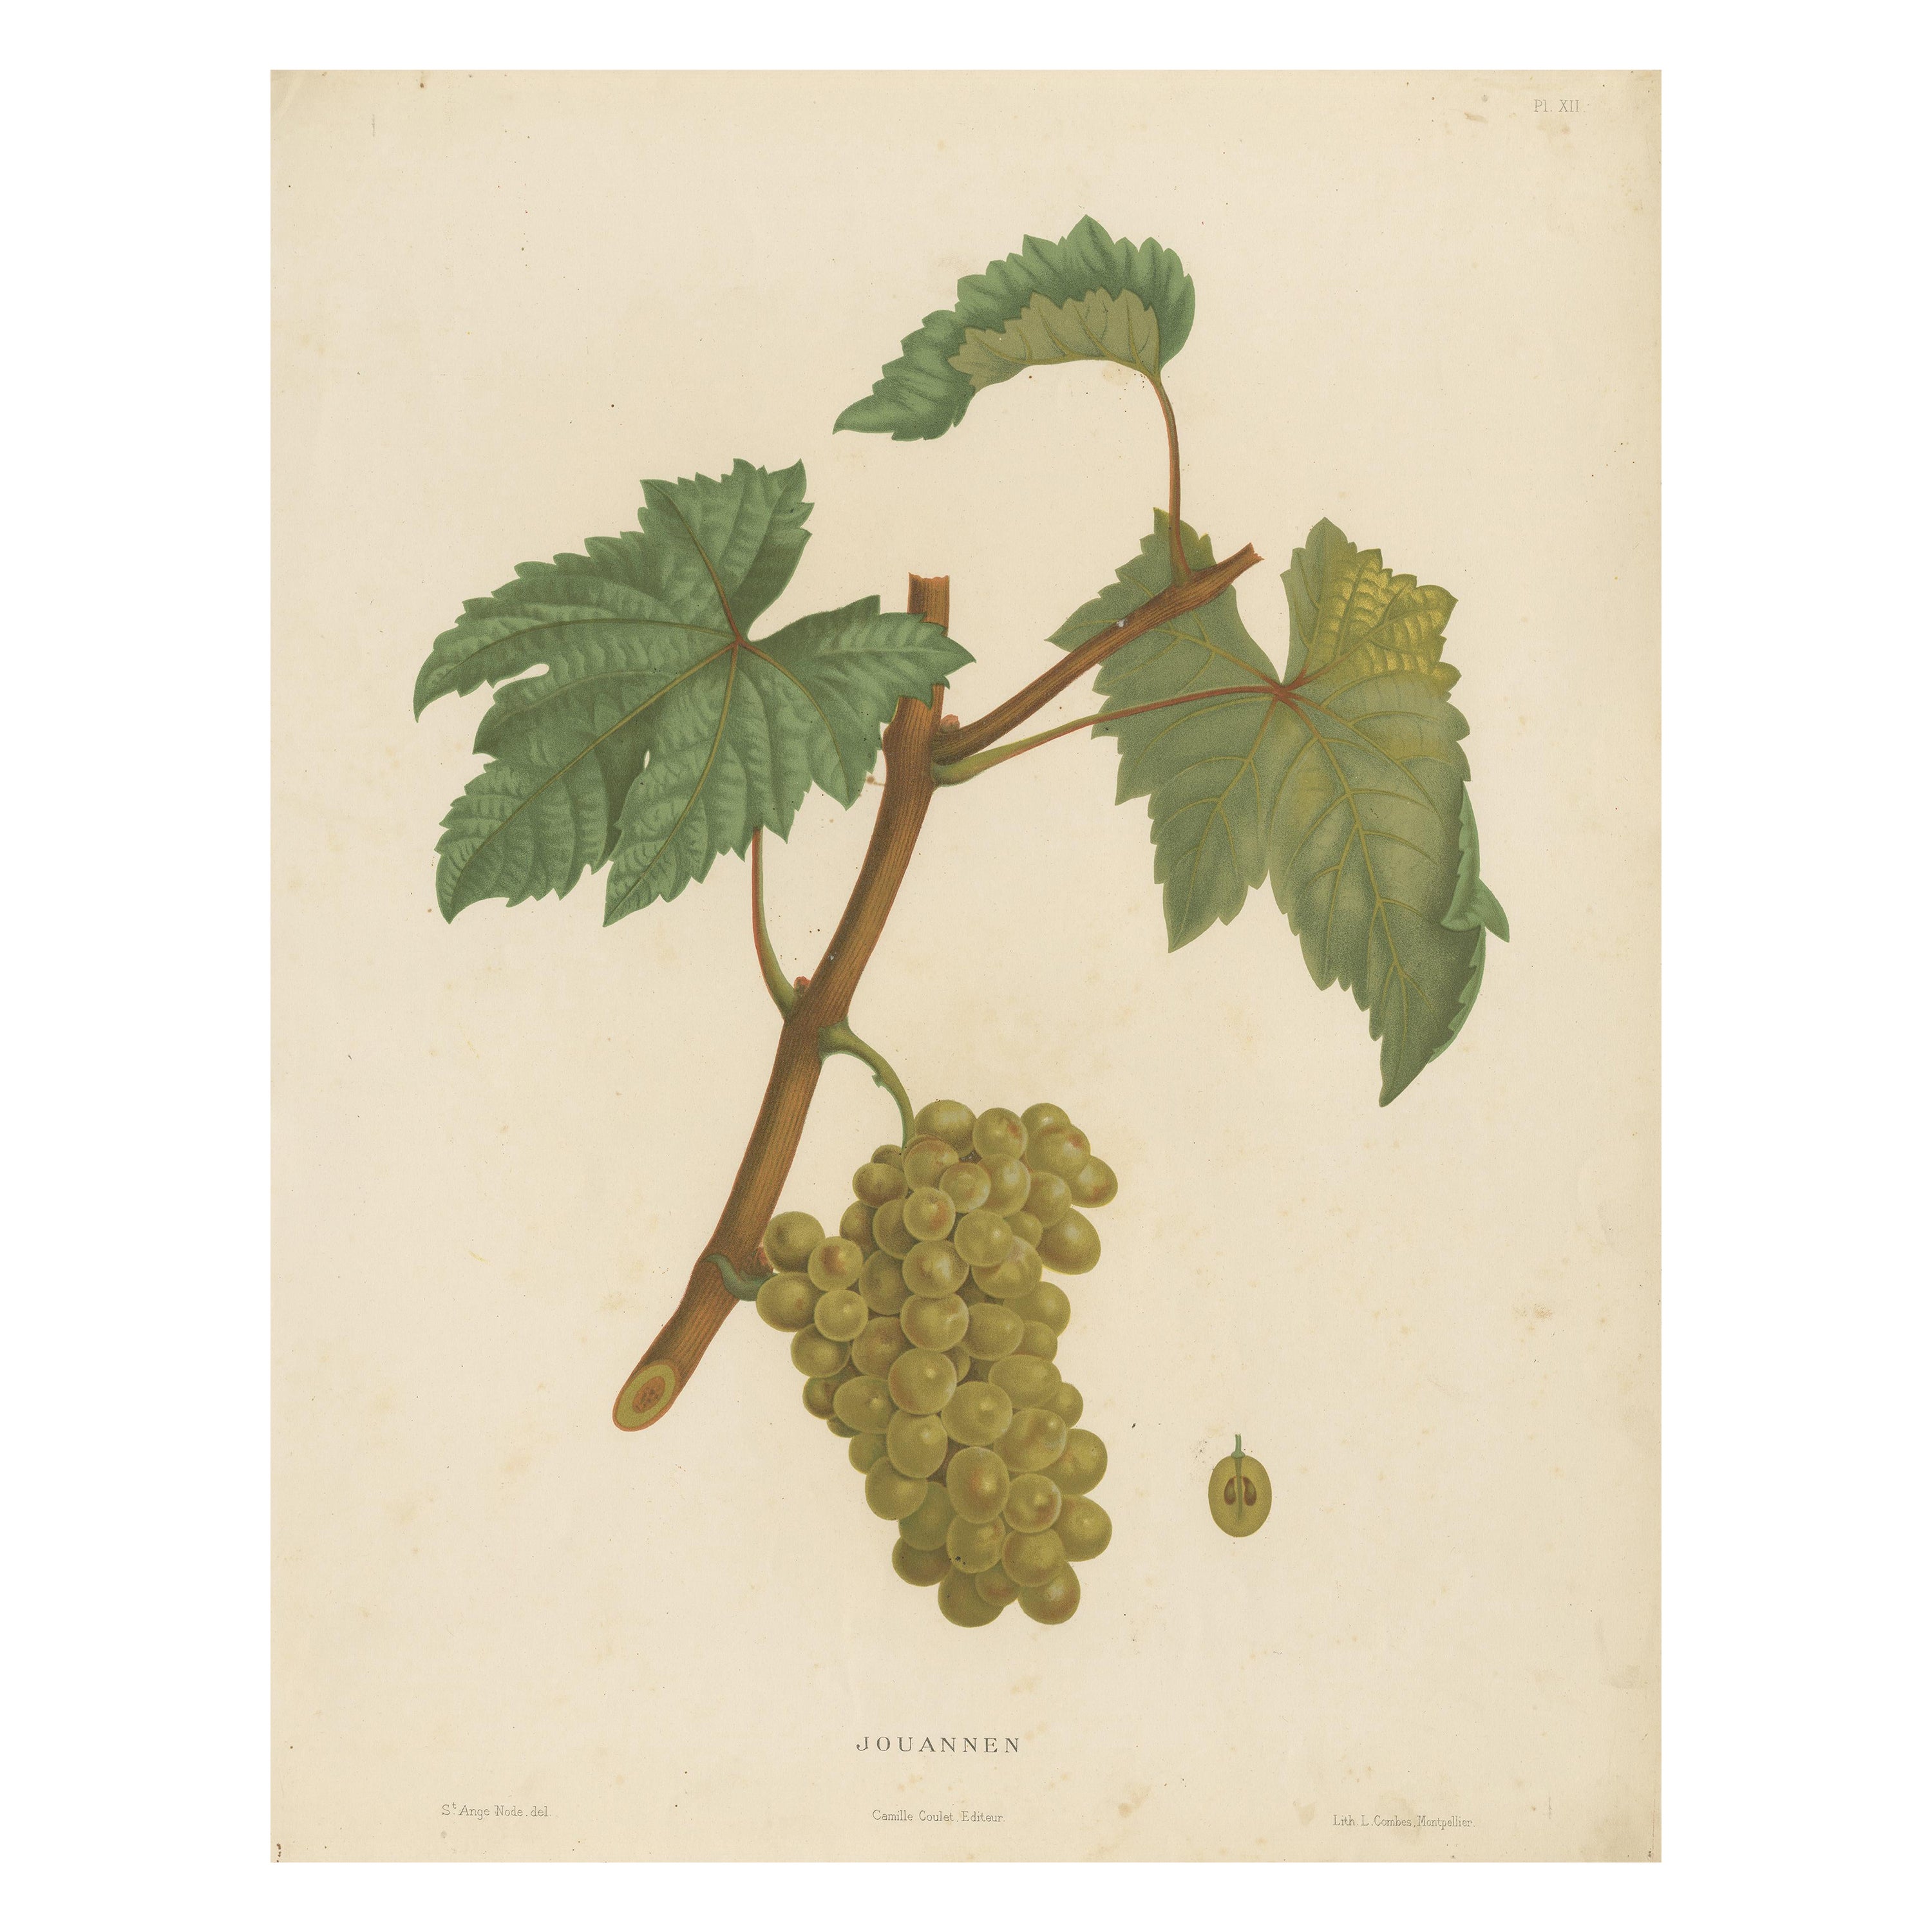 Rare Original Antique Lithograph of the Malvoisie Blanche Grape Variety, 1890